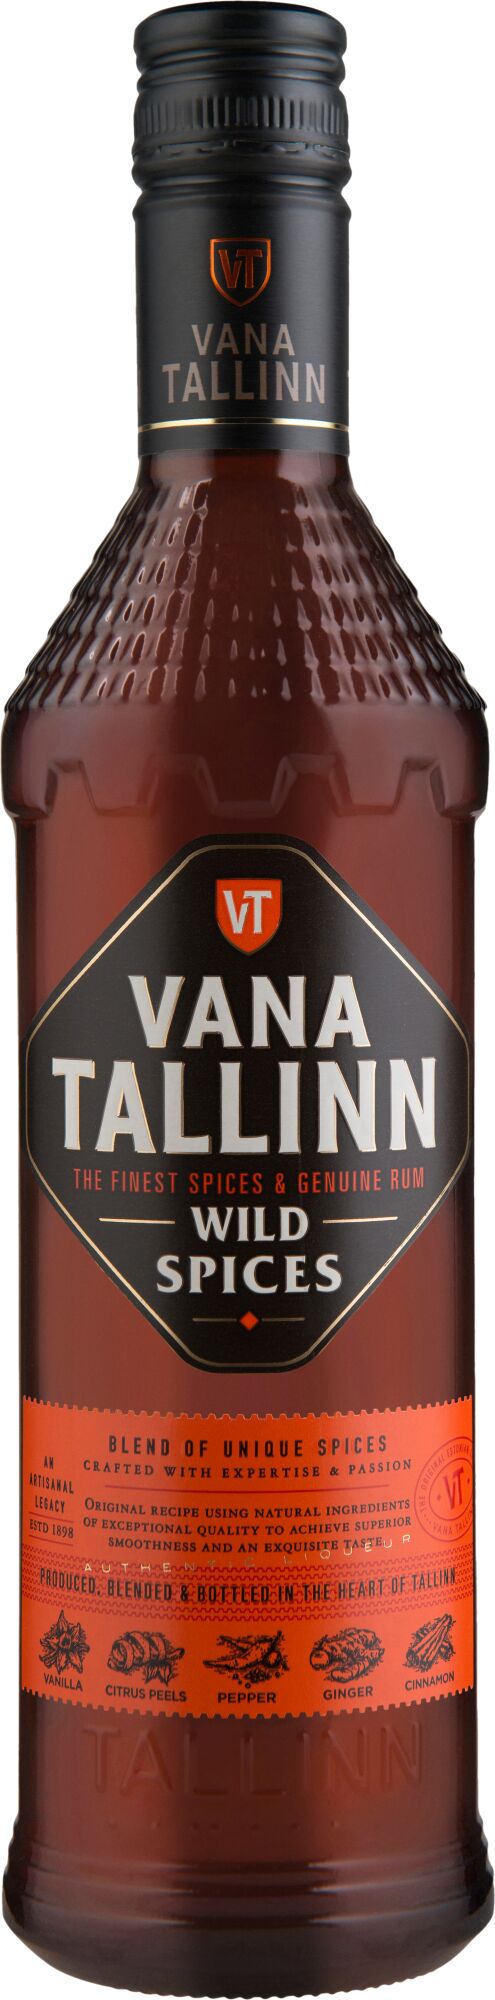 Vana Tallinn Wild Spices 50cl